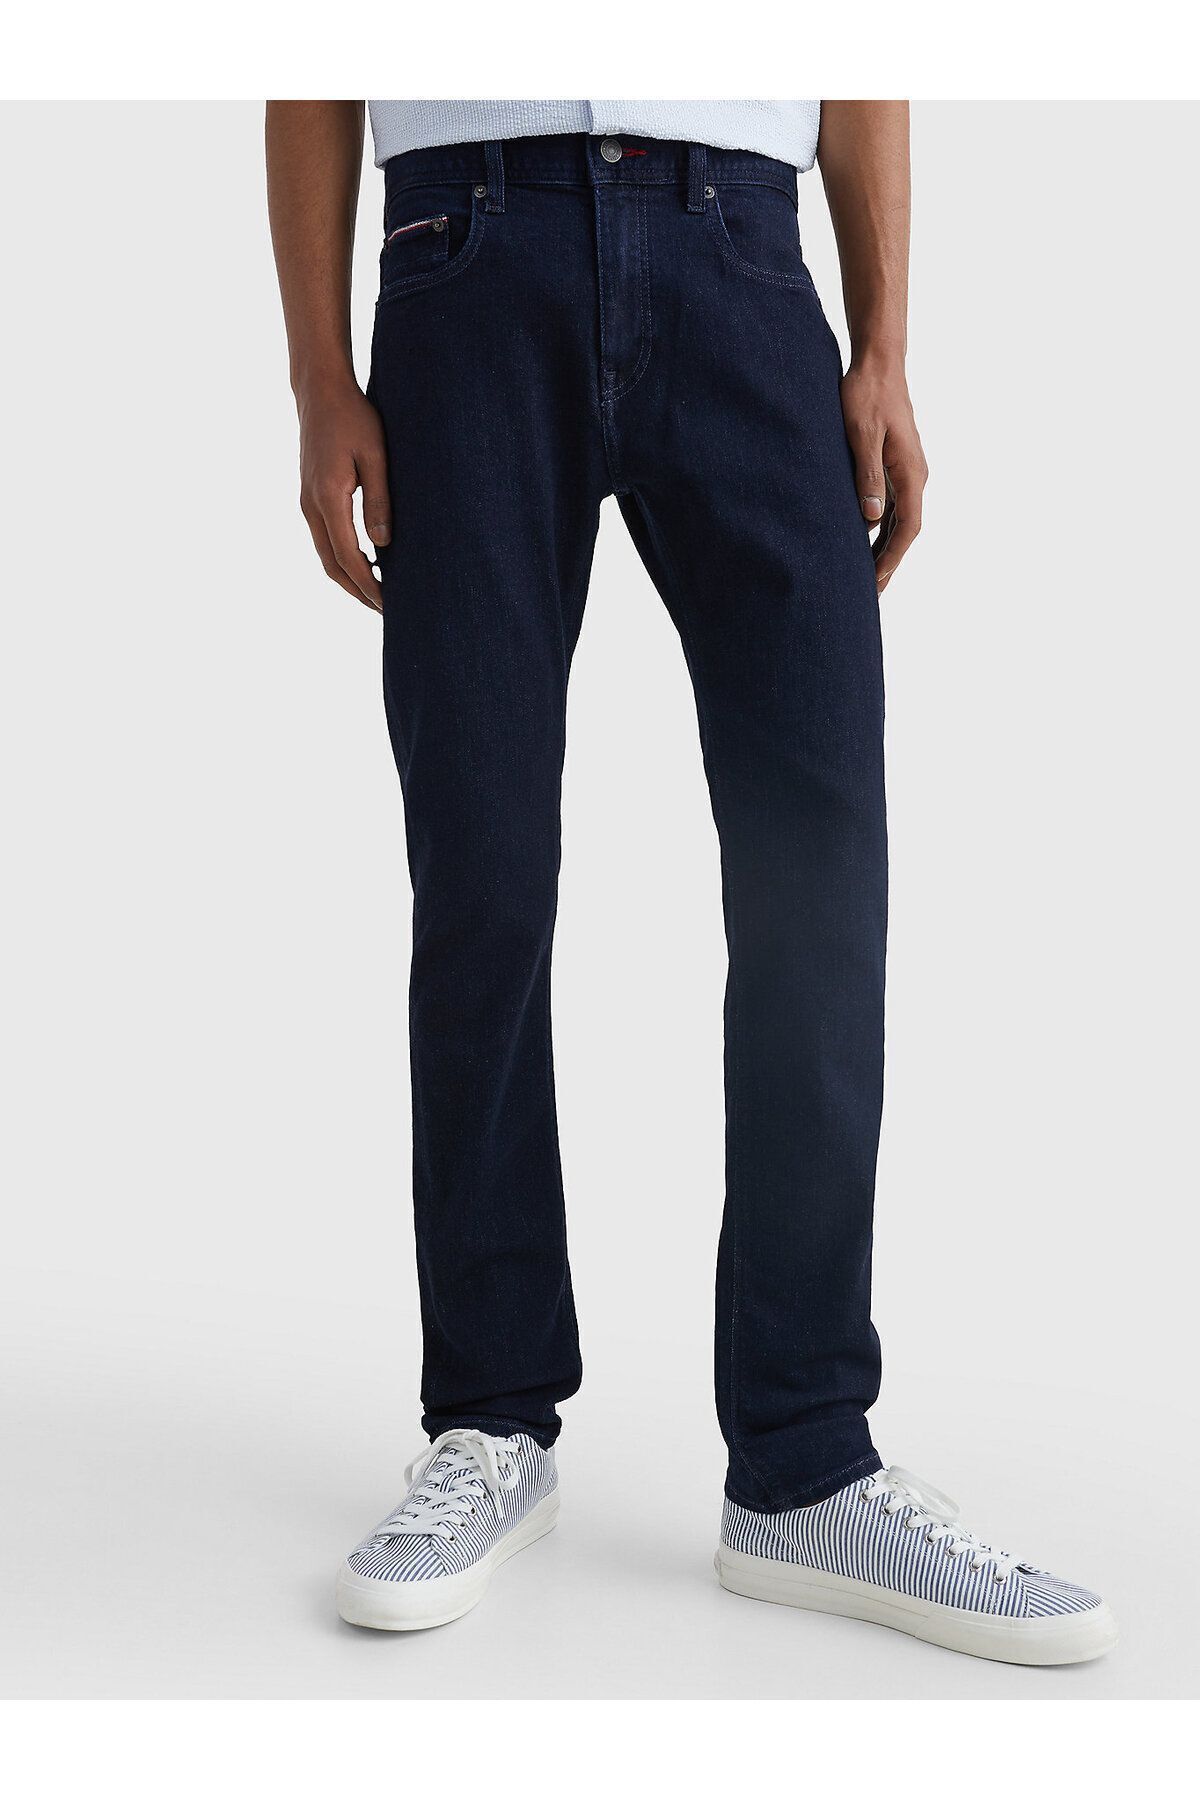 Tommy Hilfiger Erkek Denim Normal Belli Düz Model Günlük Kullanım Mavi Jeans MW0MW15600-1AW